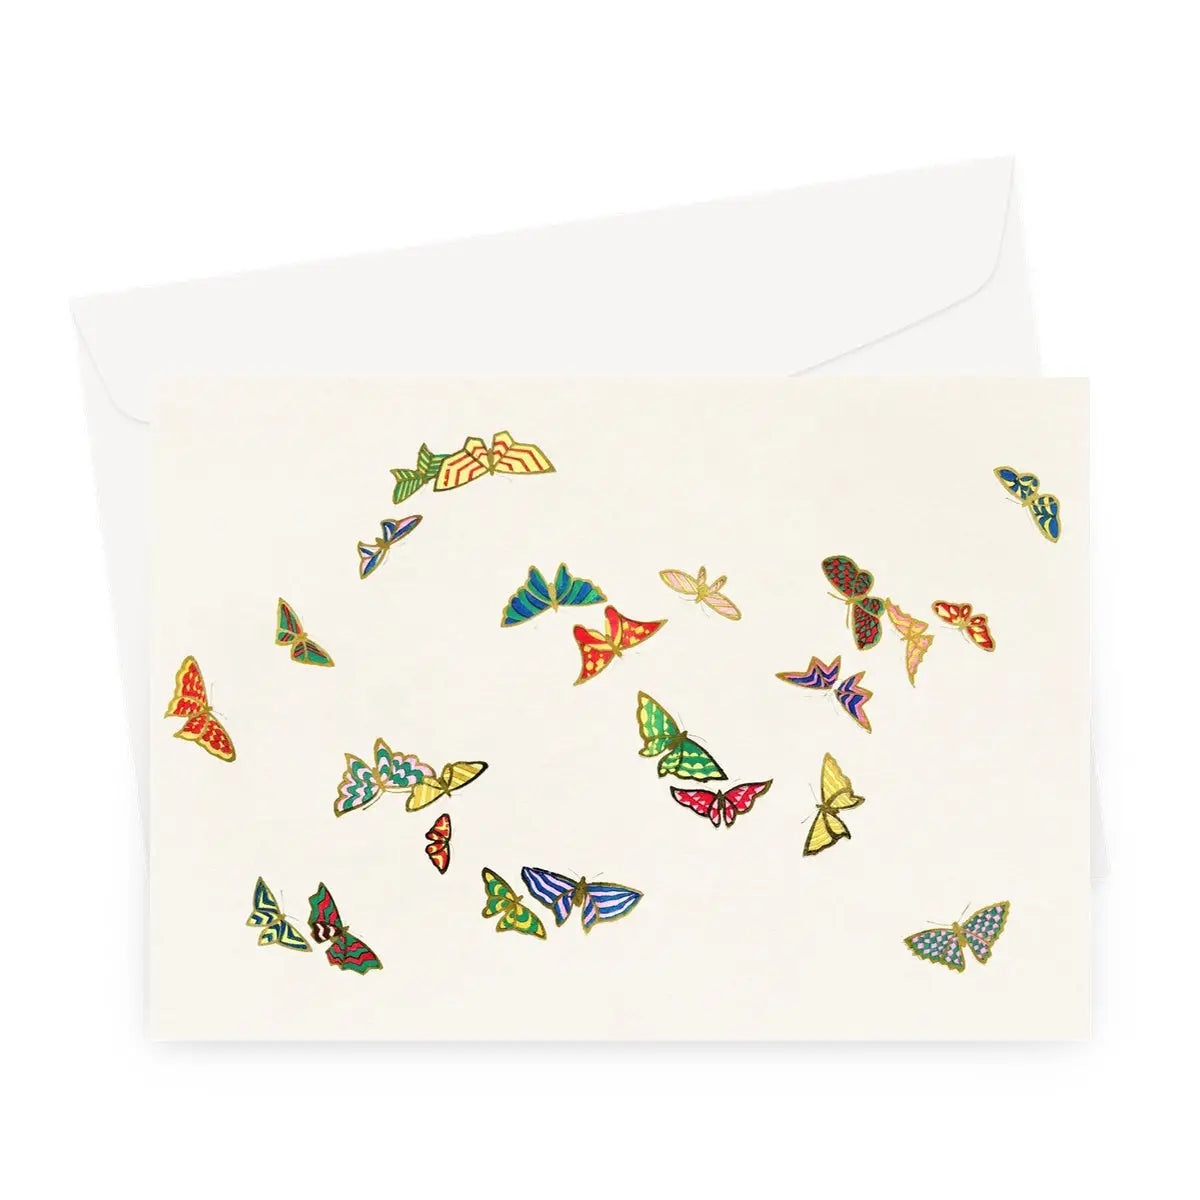 Rainbow Butterflies - Kamisaka Sekka Chō Senshu Greeting Card - A5 Landscape / 1 Card - Greeting & Note Cards